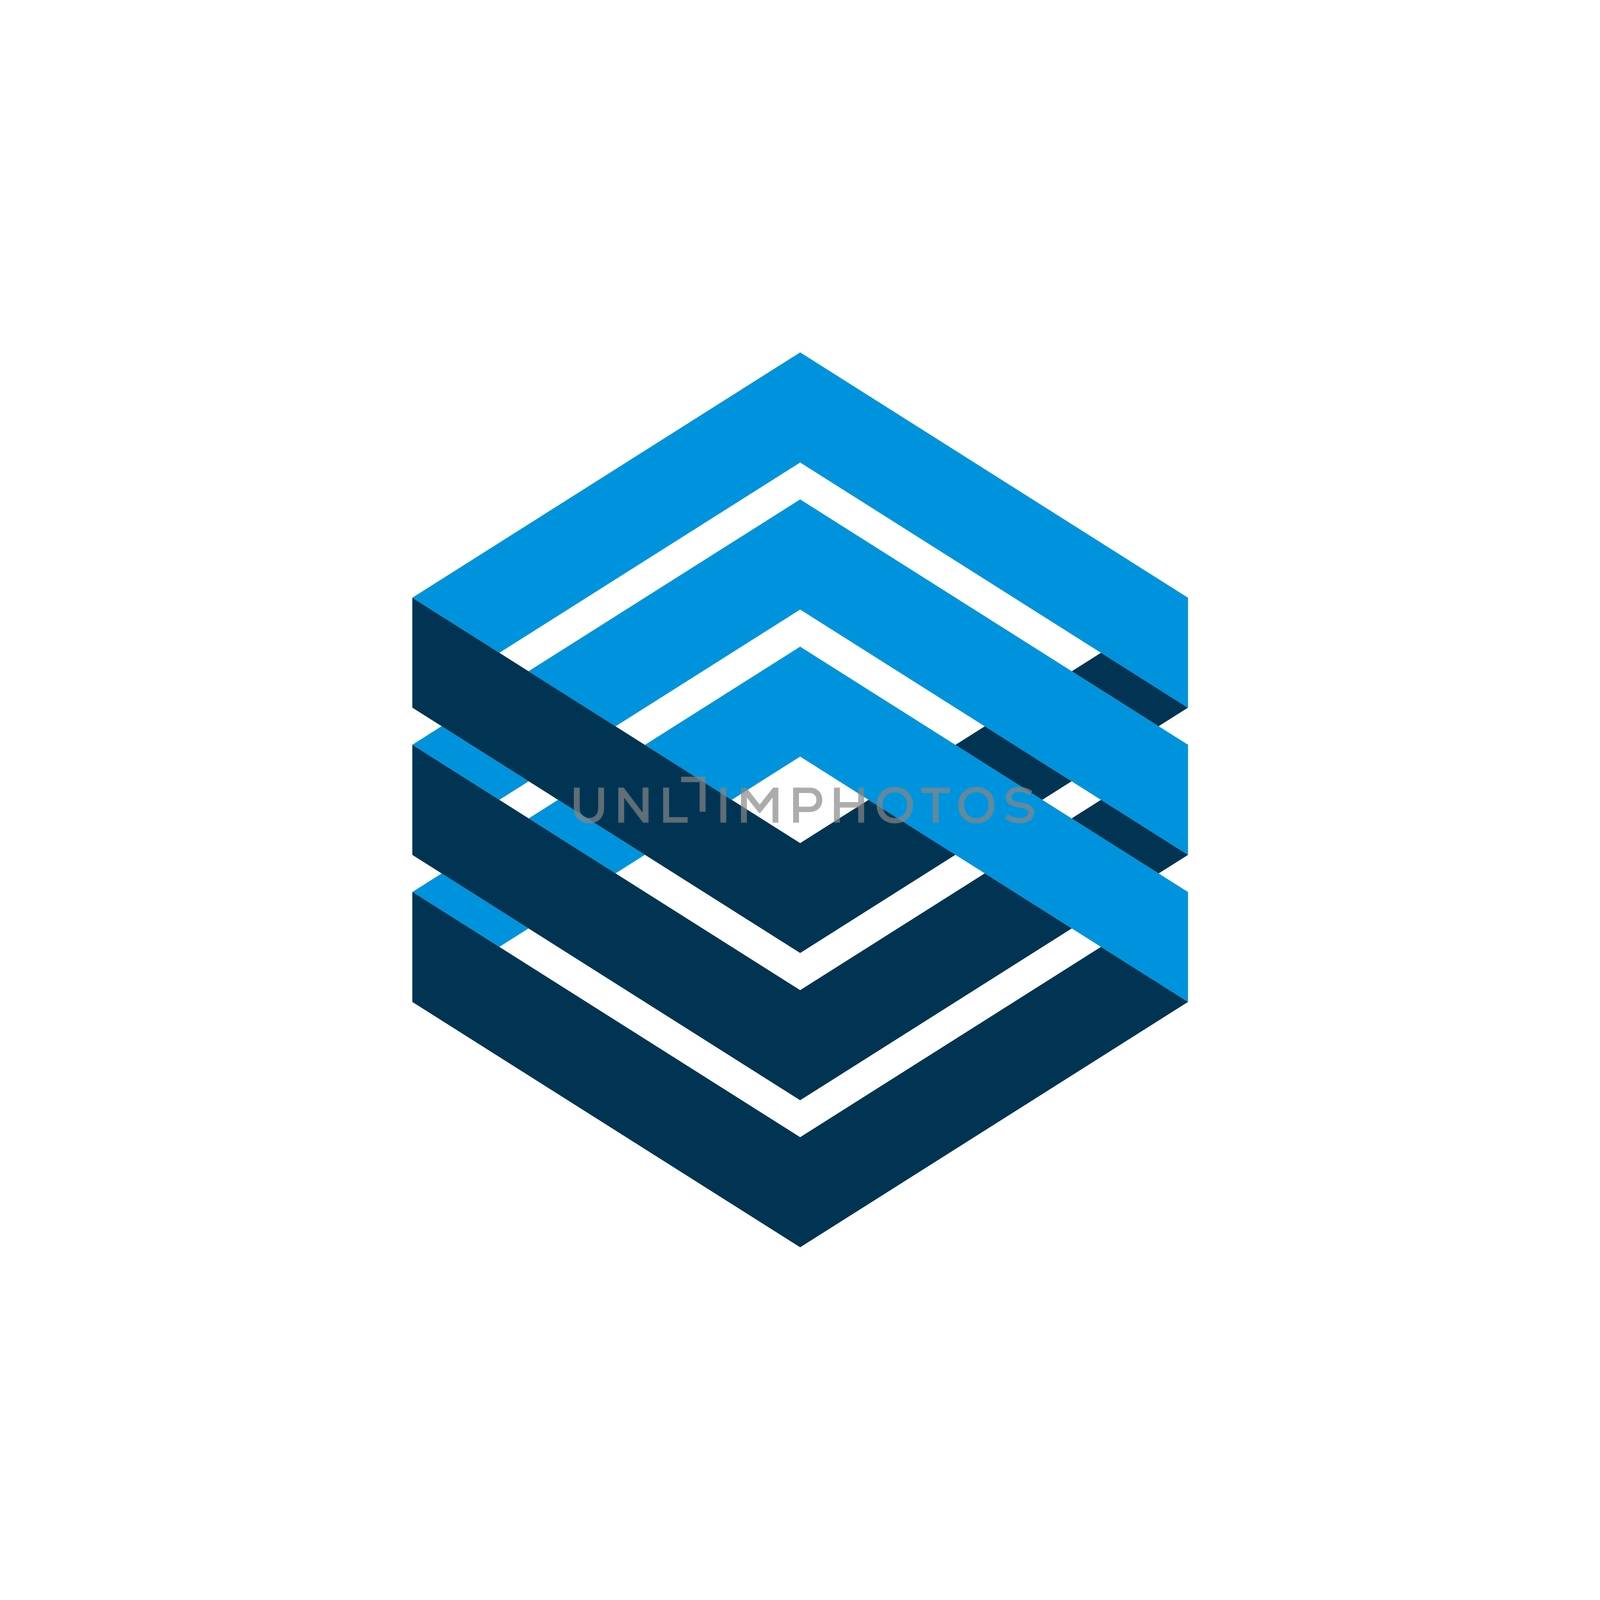 Blue Plaited Hexagon Logo Template Illustration Design. Vector EPS 10.